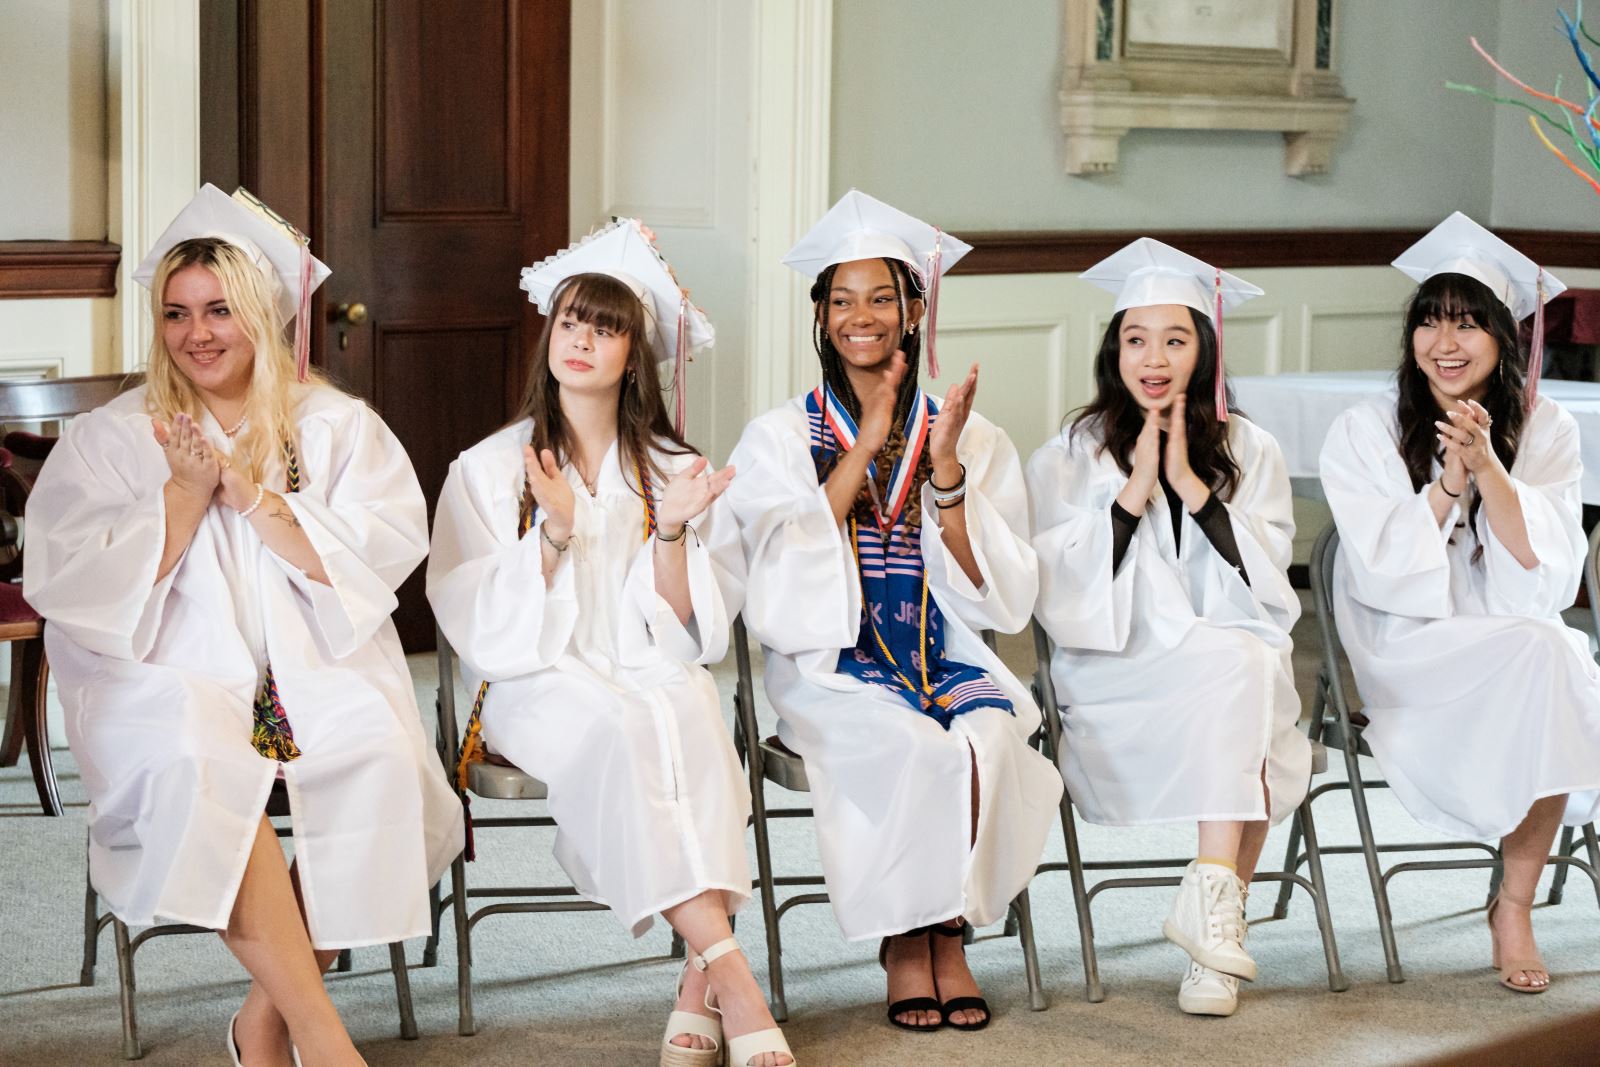 Woodward Students Seated at Graduation